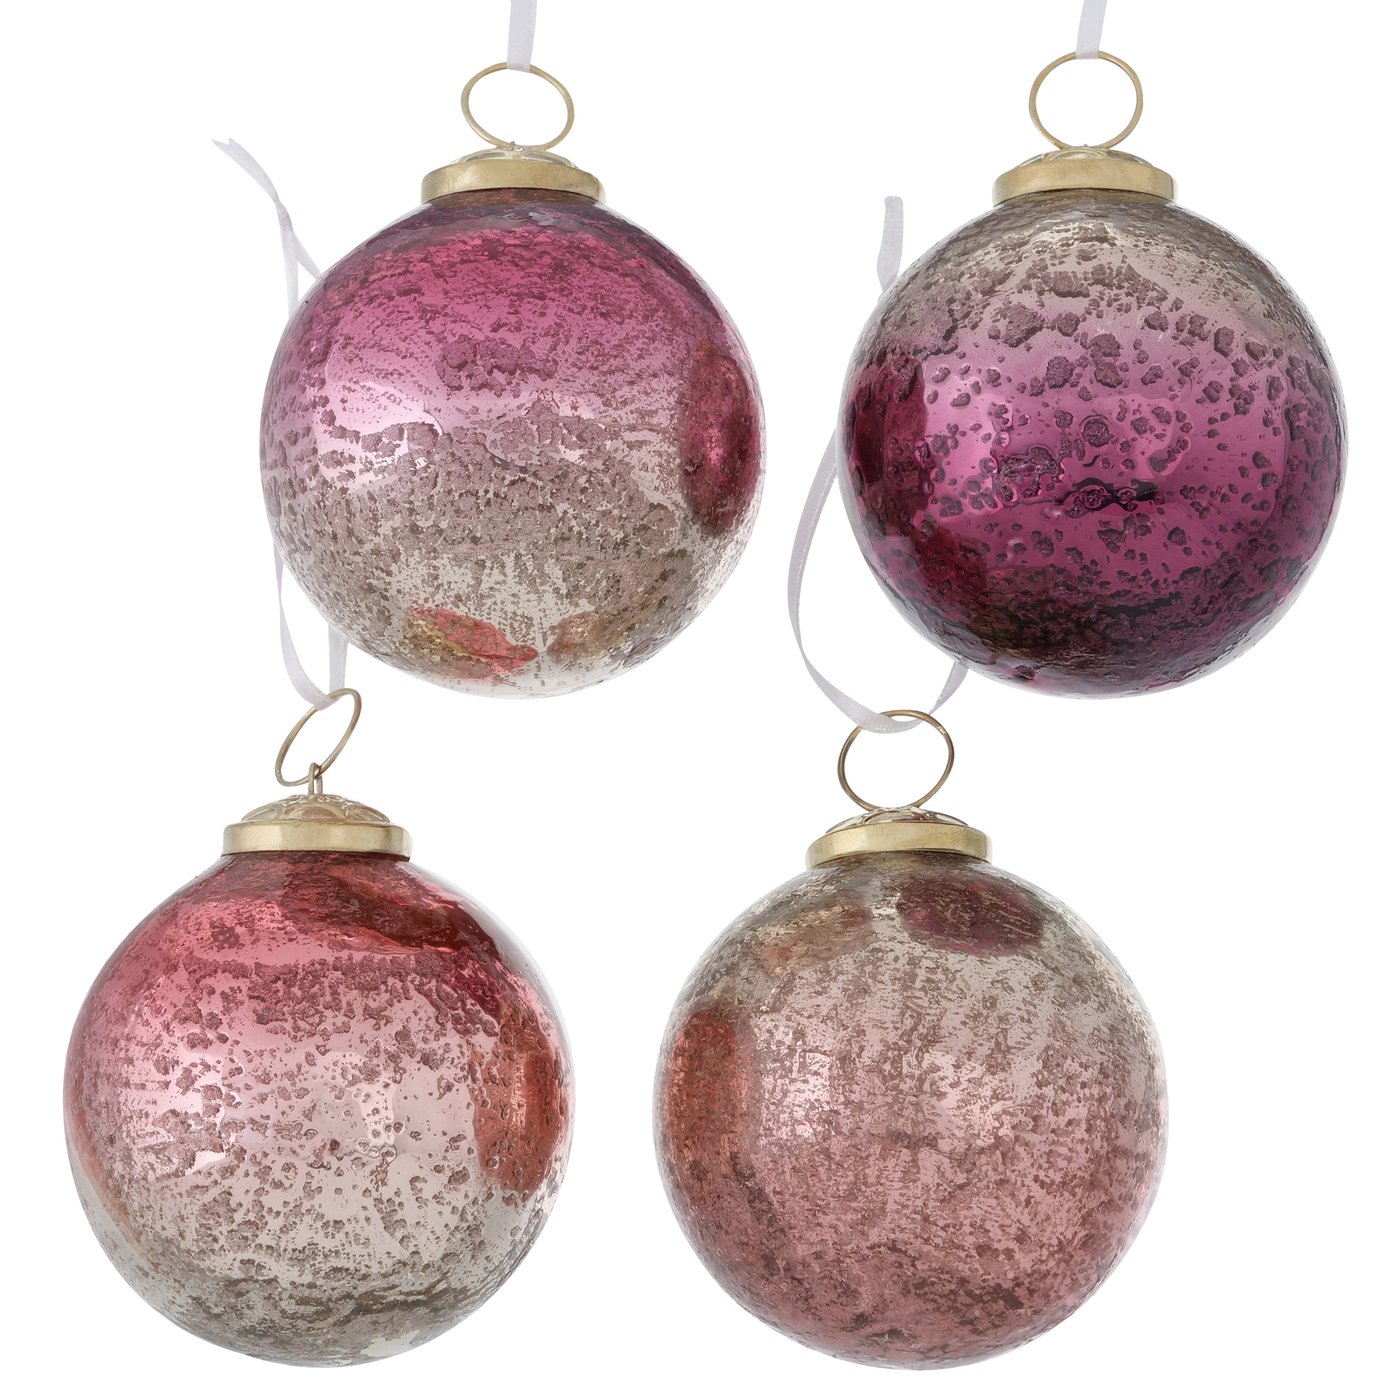 Edle Weihnachtskugel "Solafria" rosa gold 8er Set - D10cm, 2013489, 4020607910706, Christbaumkugel, Weihnachtsbaumkugel, Boltze Xmas